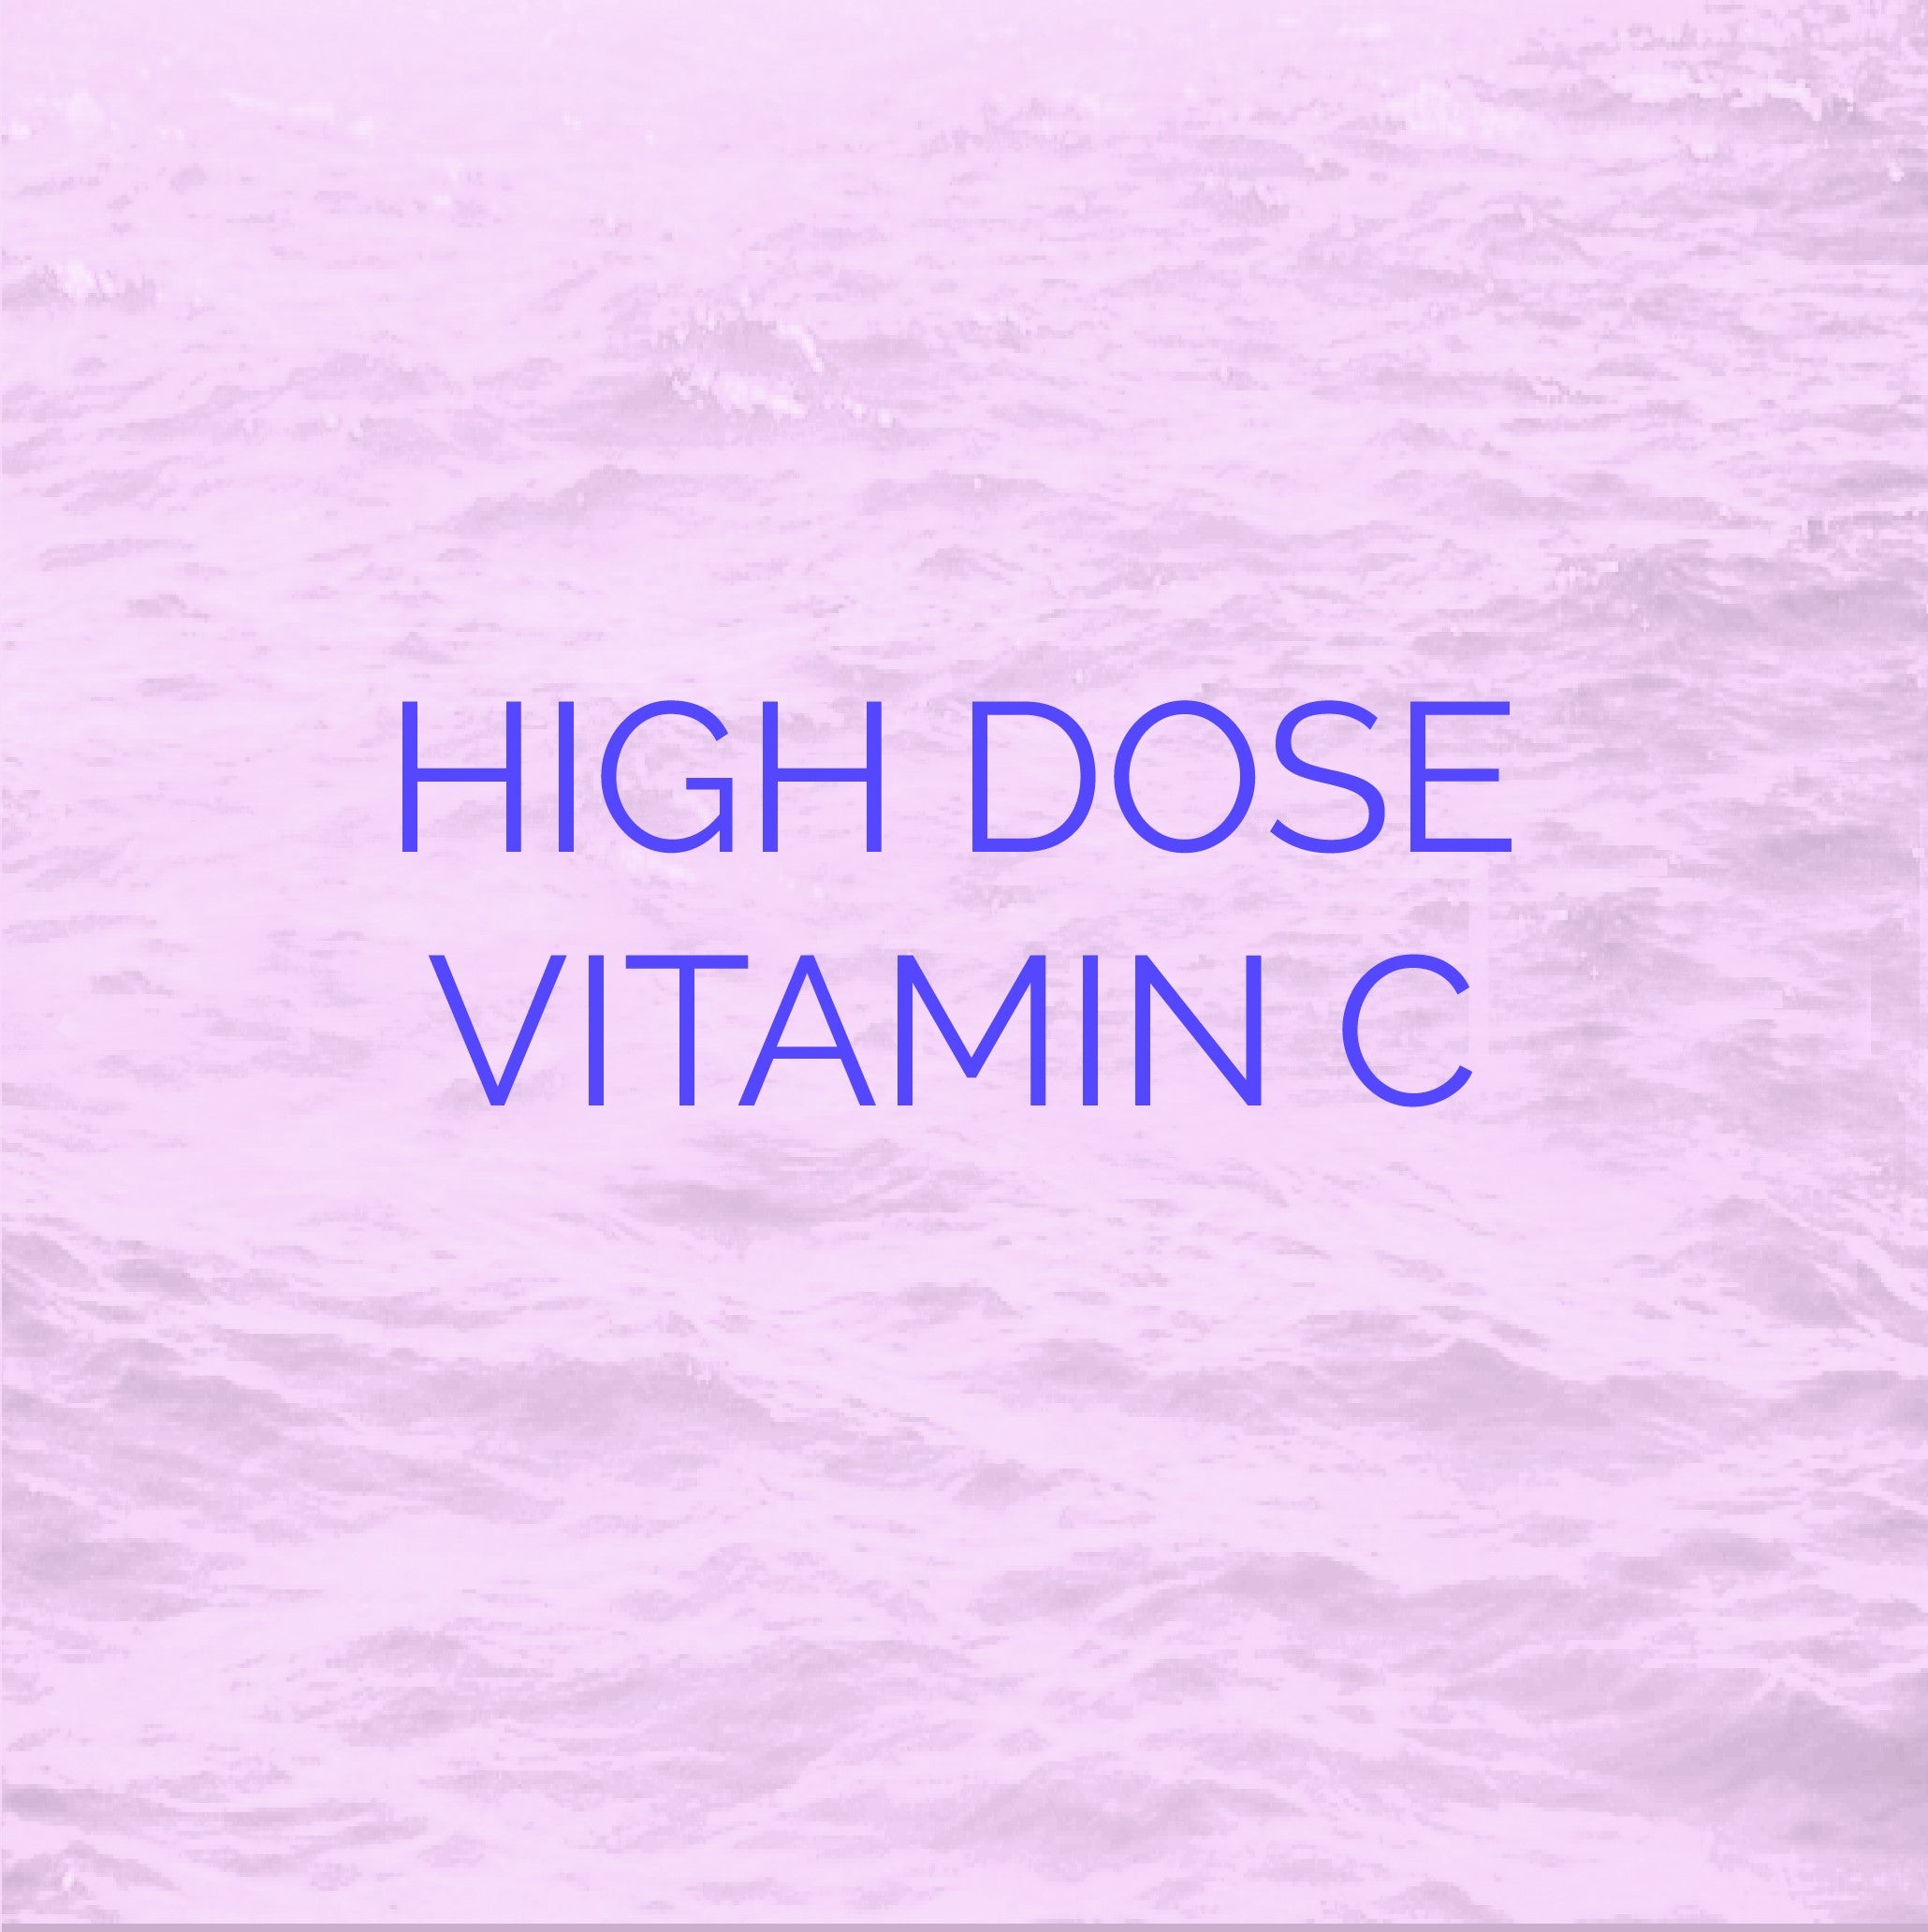 An icon representing High-Dose Vitamin C